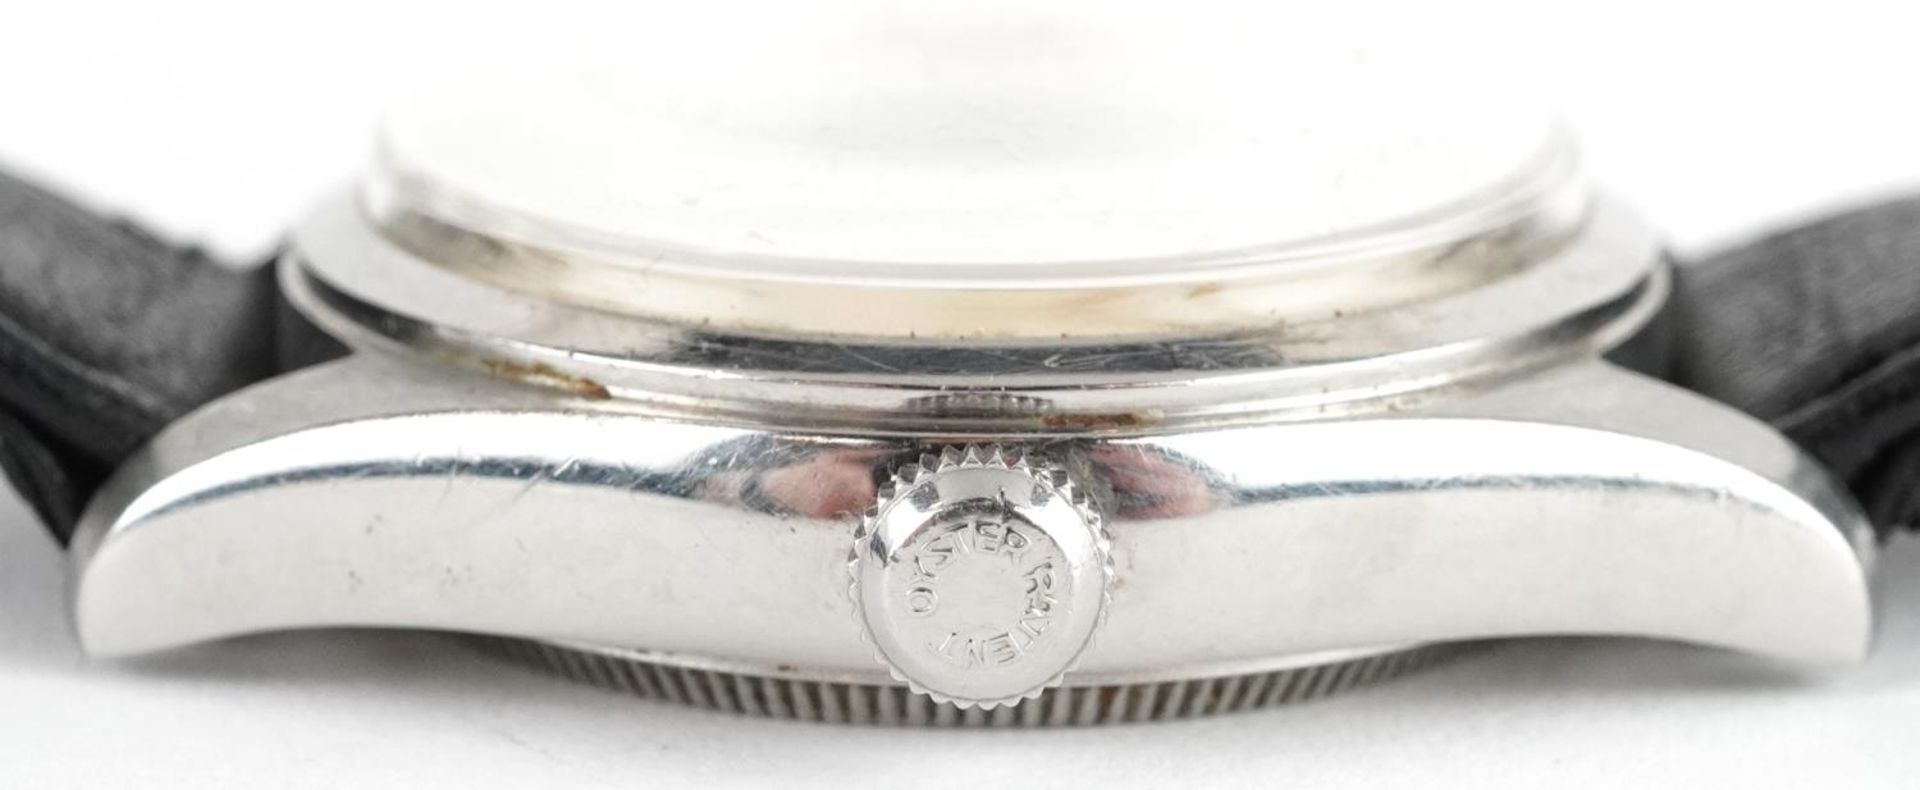 Tudor, gentlemen's stainless steel Tudor Oyster wristwatch, 33mm in diameter : For further - Image 4 of 4